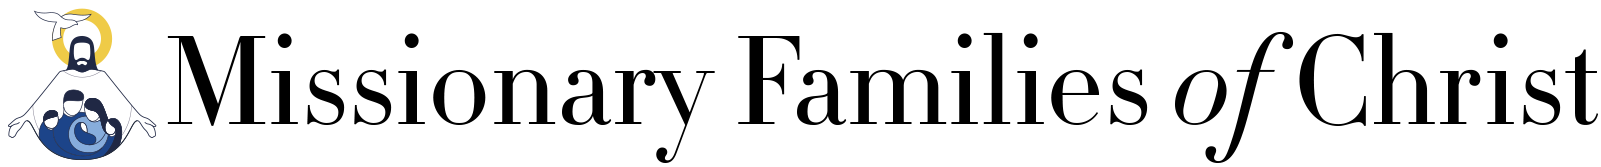 MFC logo retina